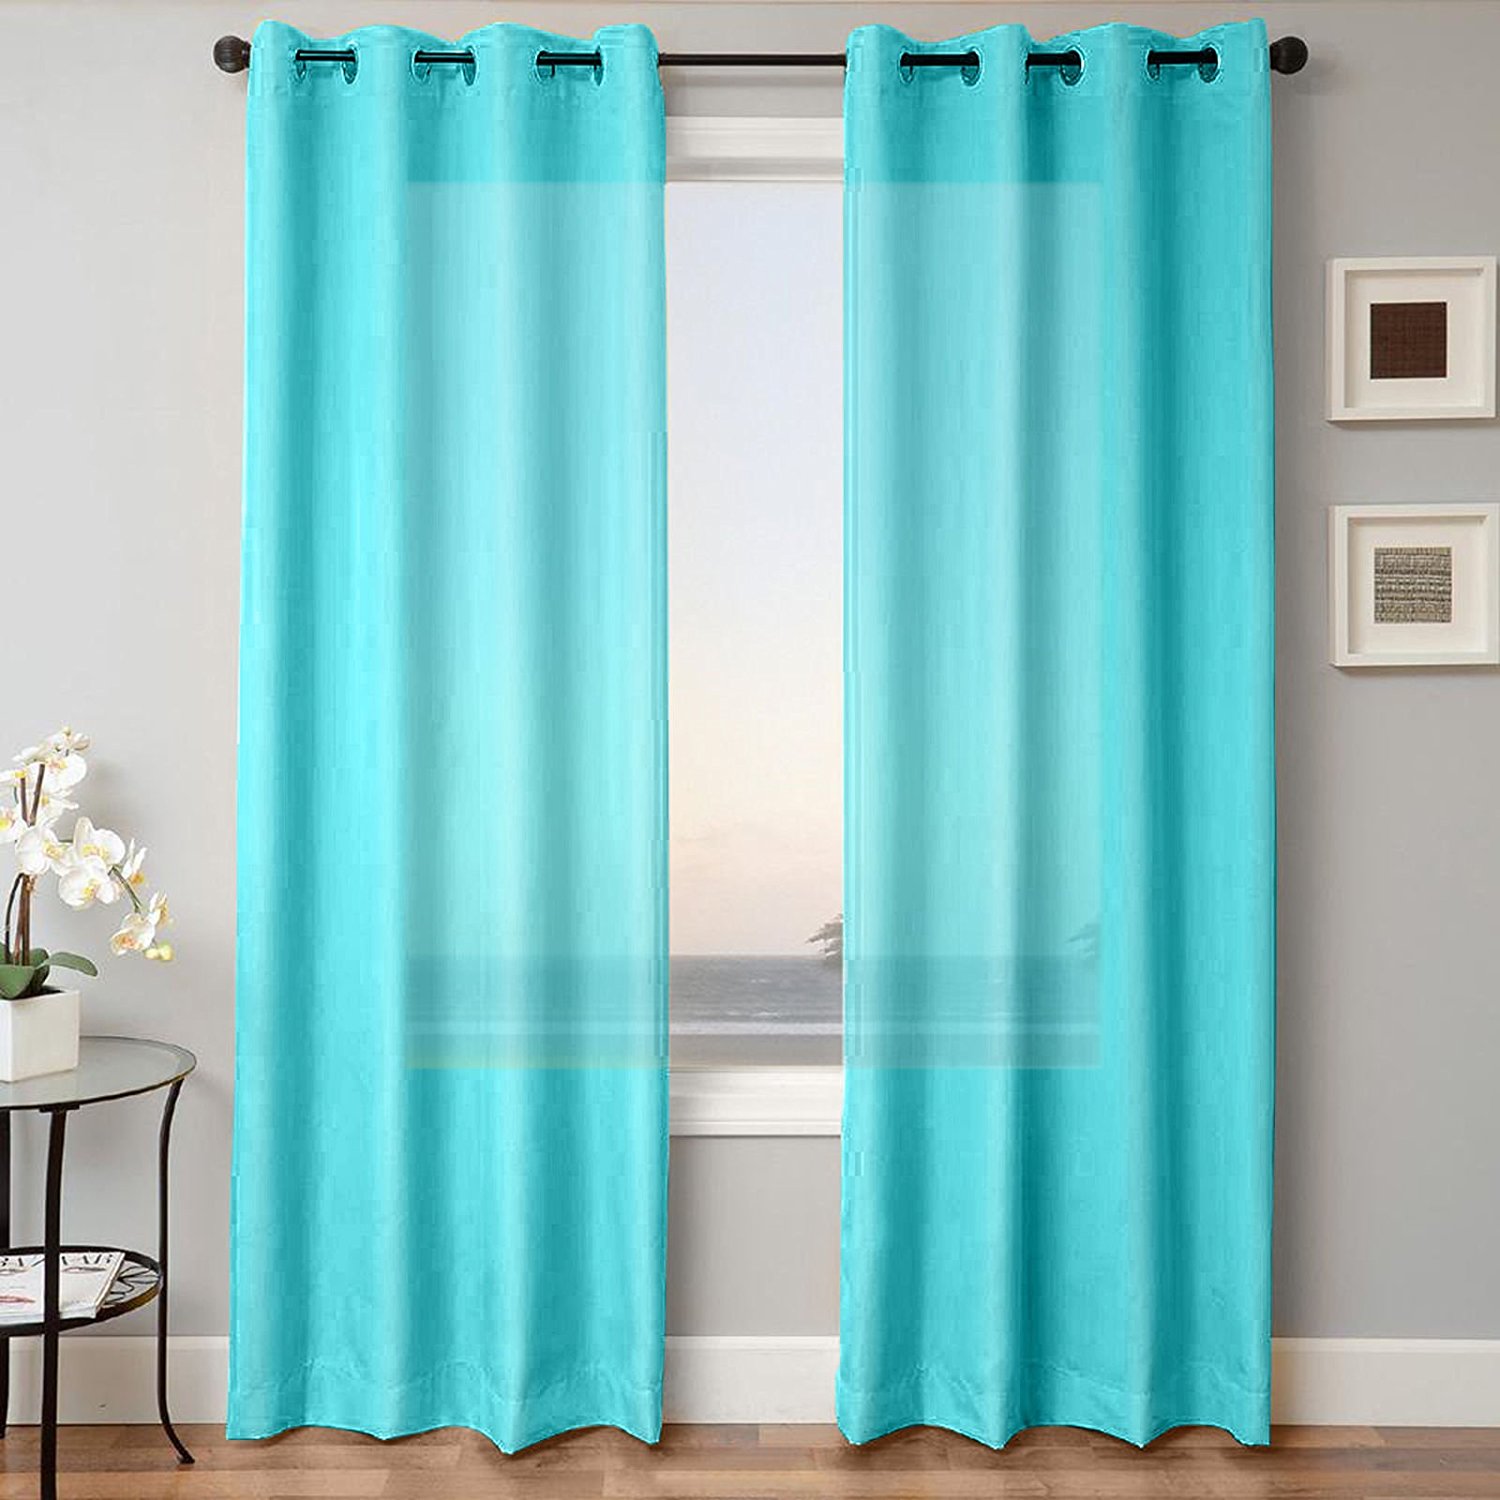 turquoise curtains 2 panel mira solid turquoise semi sheer window faux silk antique bronze HXRALLI